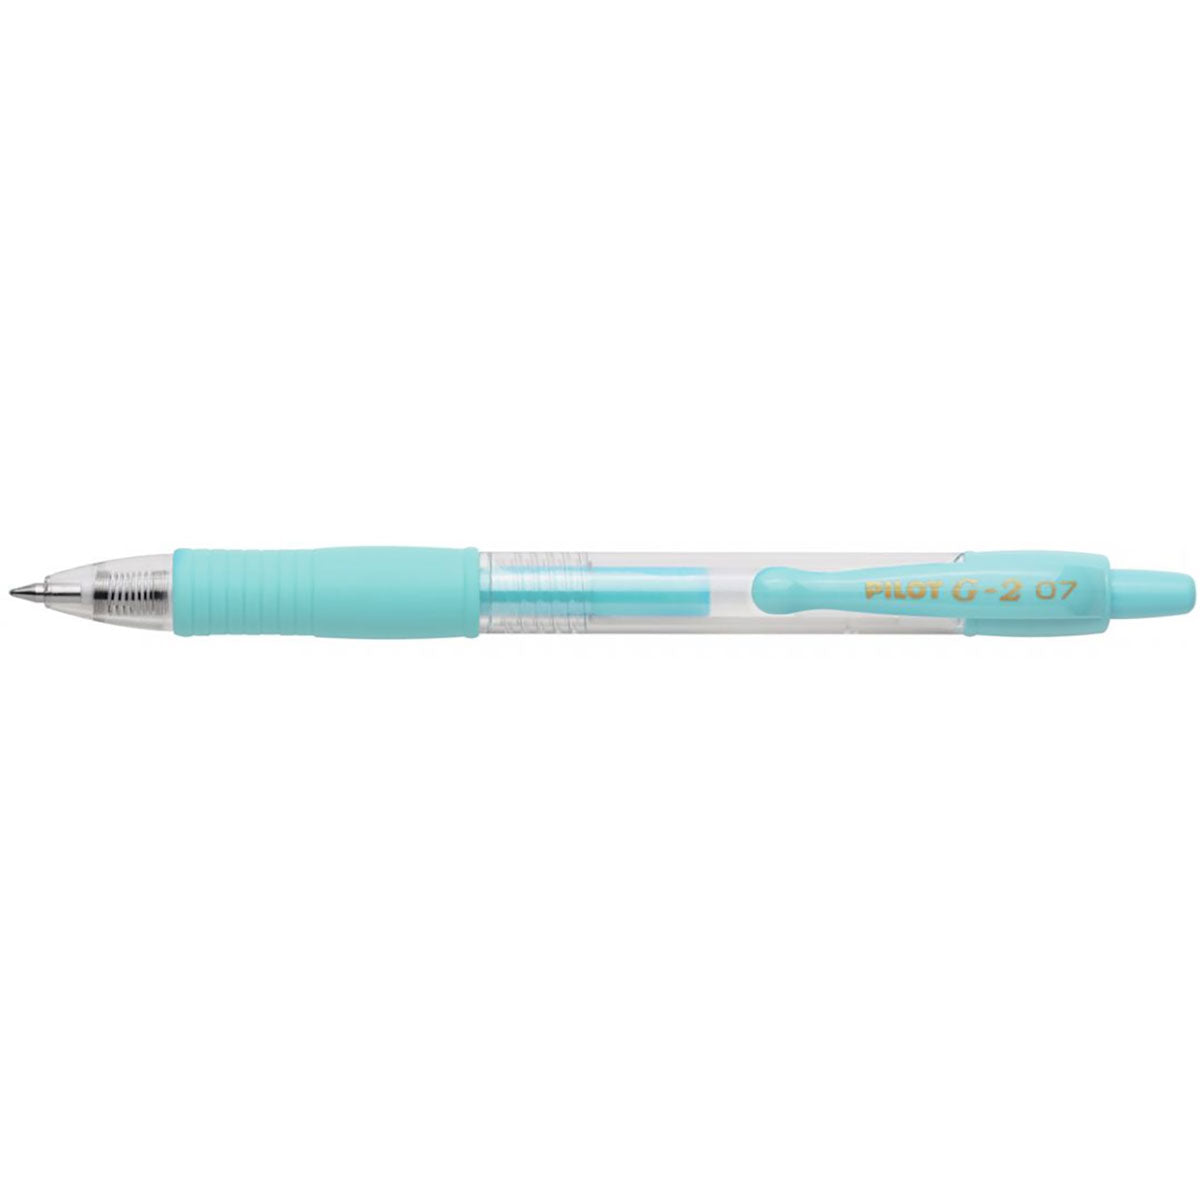 Pilot G2 7 Pastel Blue, Fine Gel Pen, 0.7MM - 12793  Pilot Gel Ink Pens